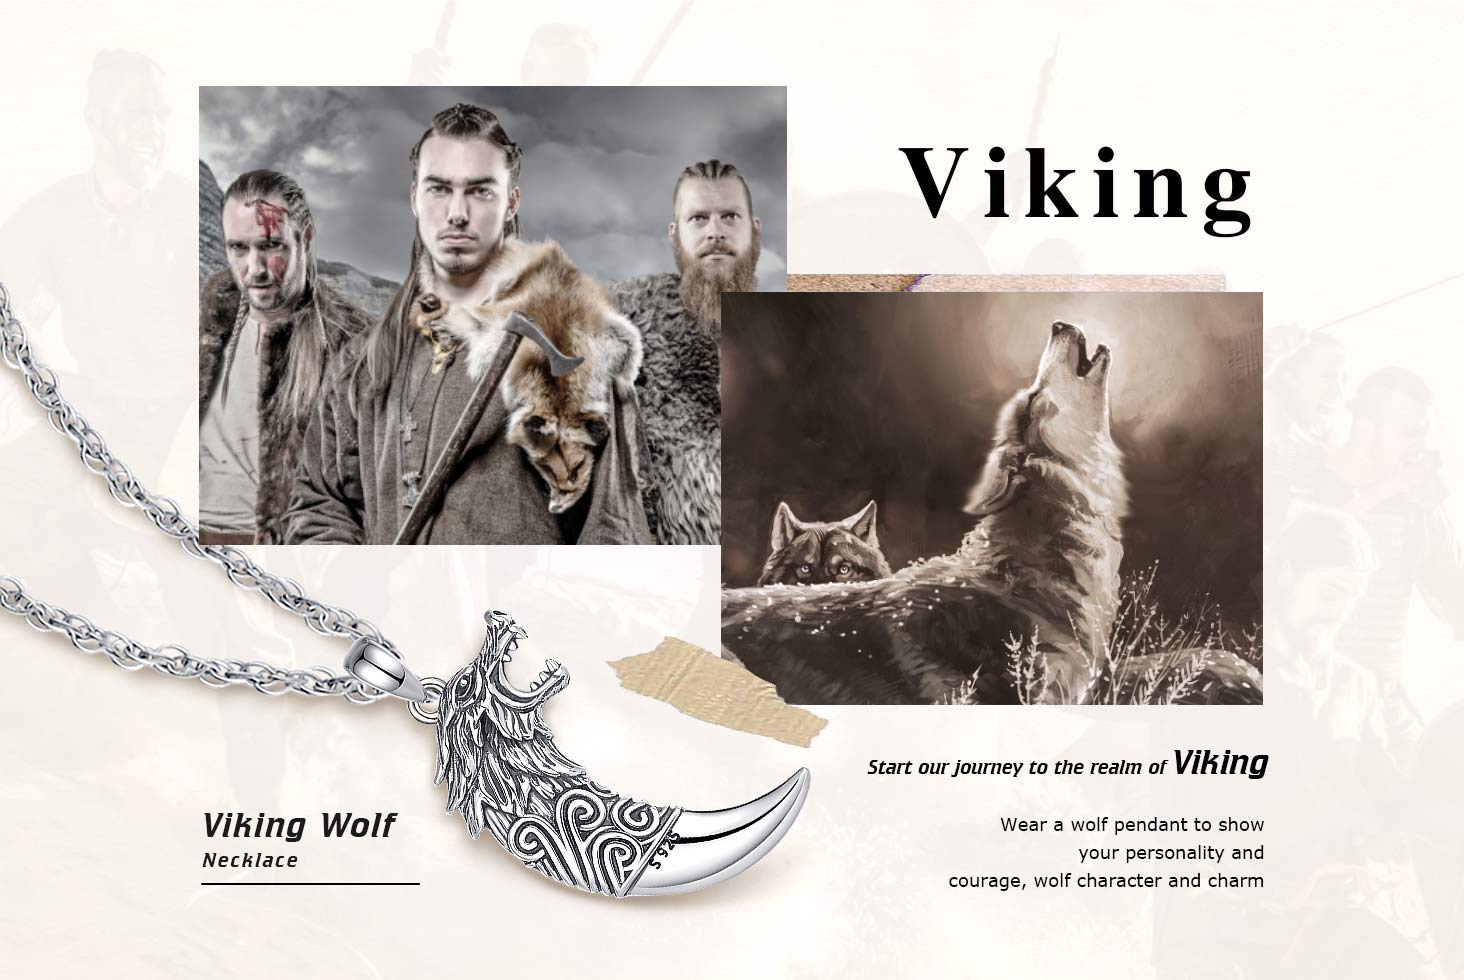 Unleash Power & Courage with Viking God Thor's Hammer Pendant